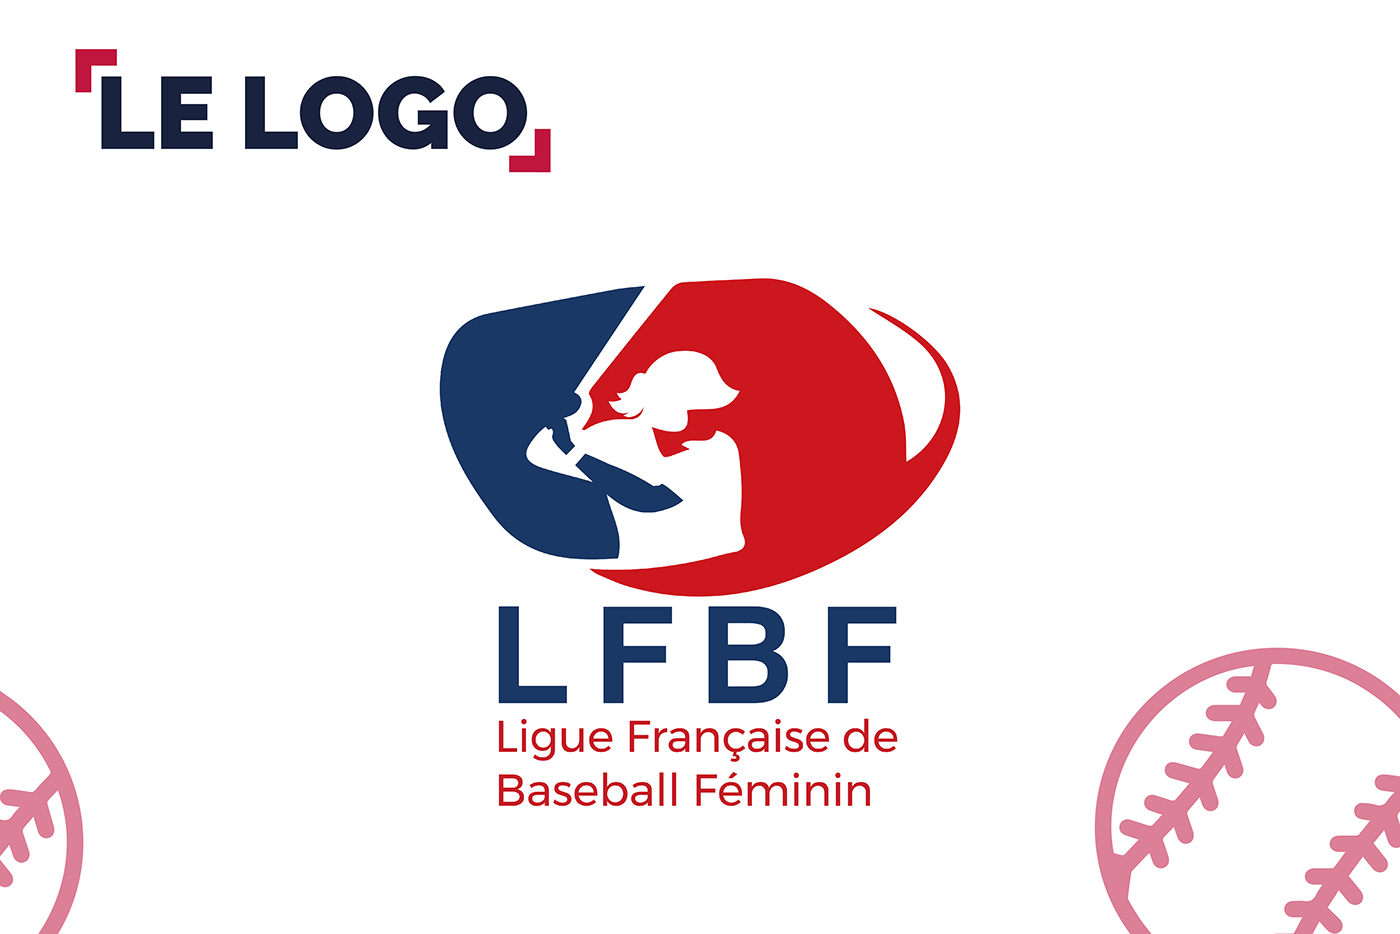 baseball feminine Française ligue sport